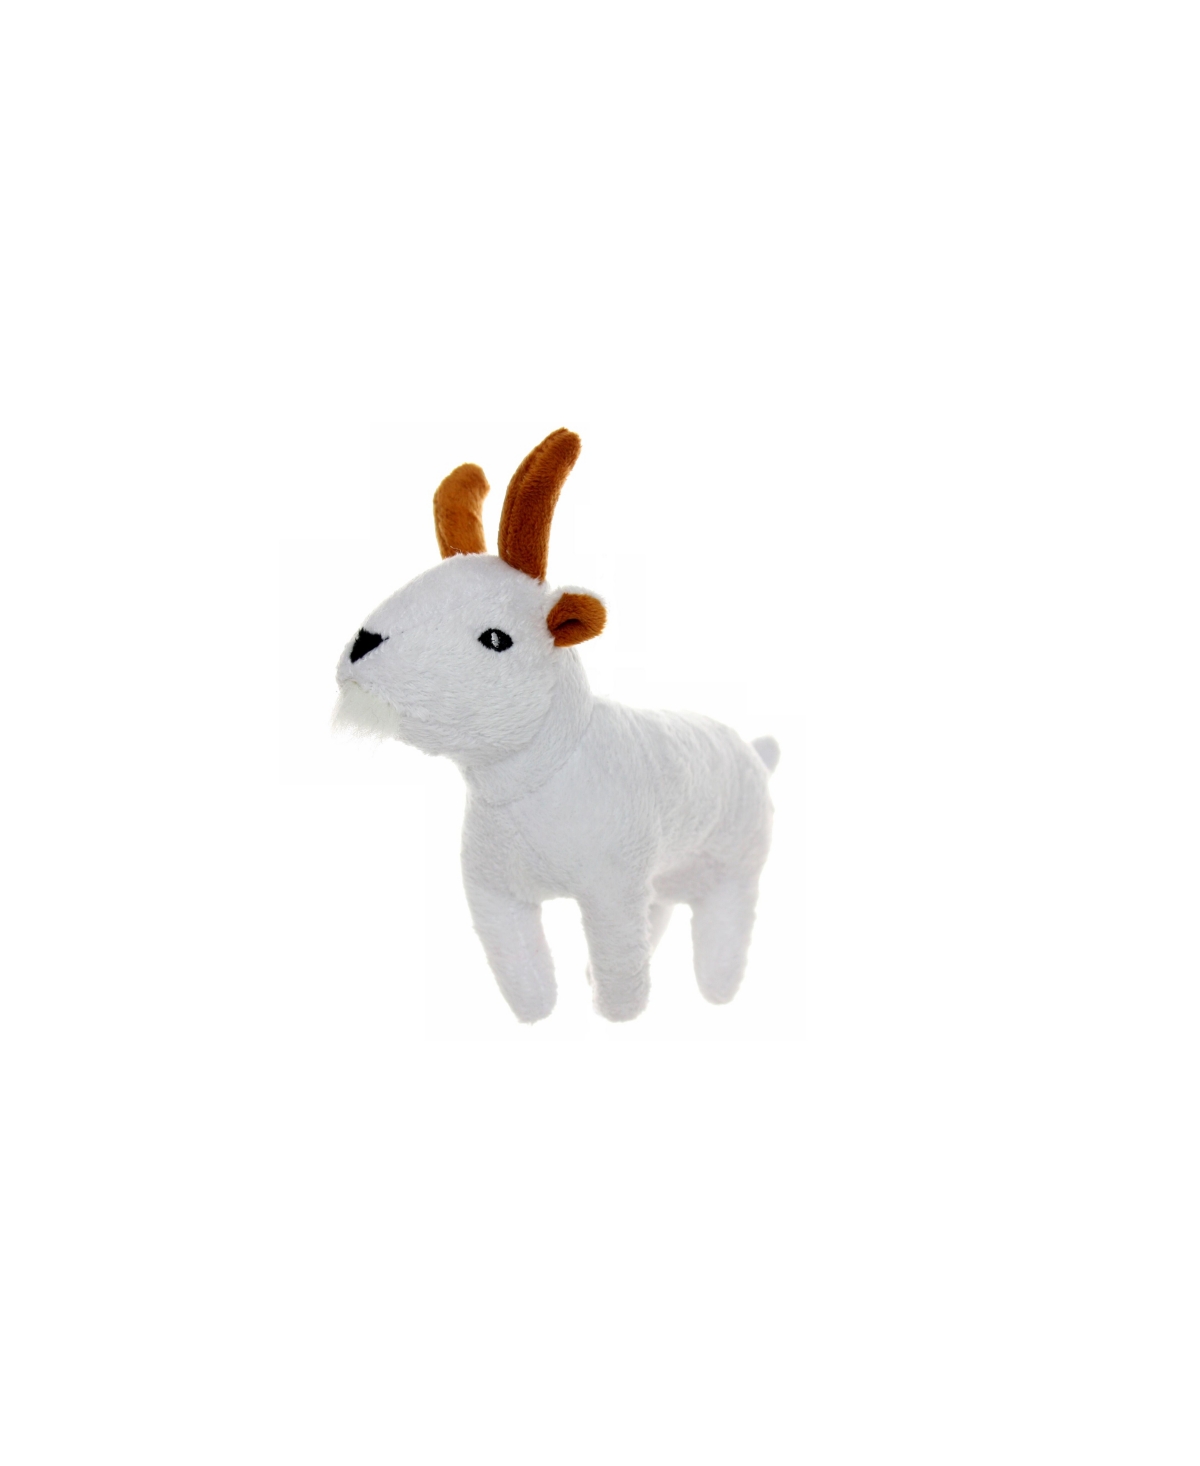 Jr Farm Goat, Dog Toy - White